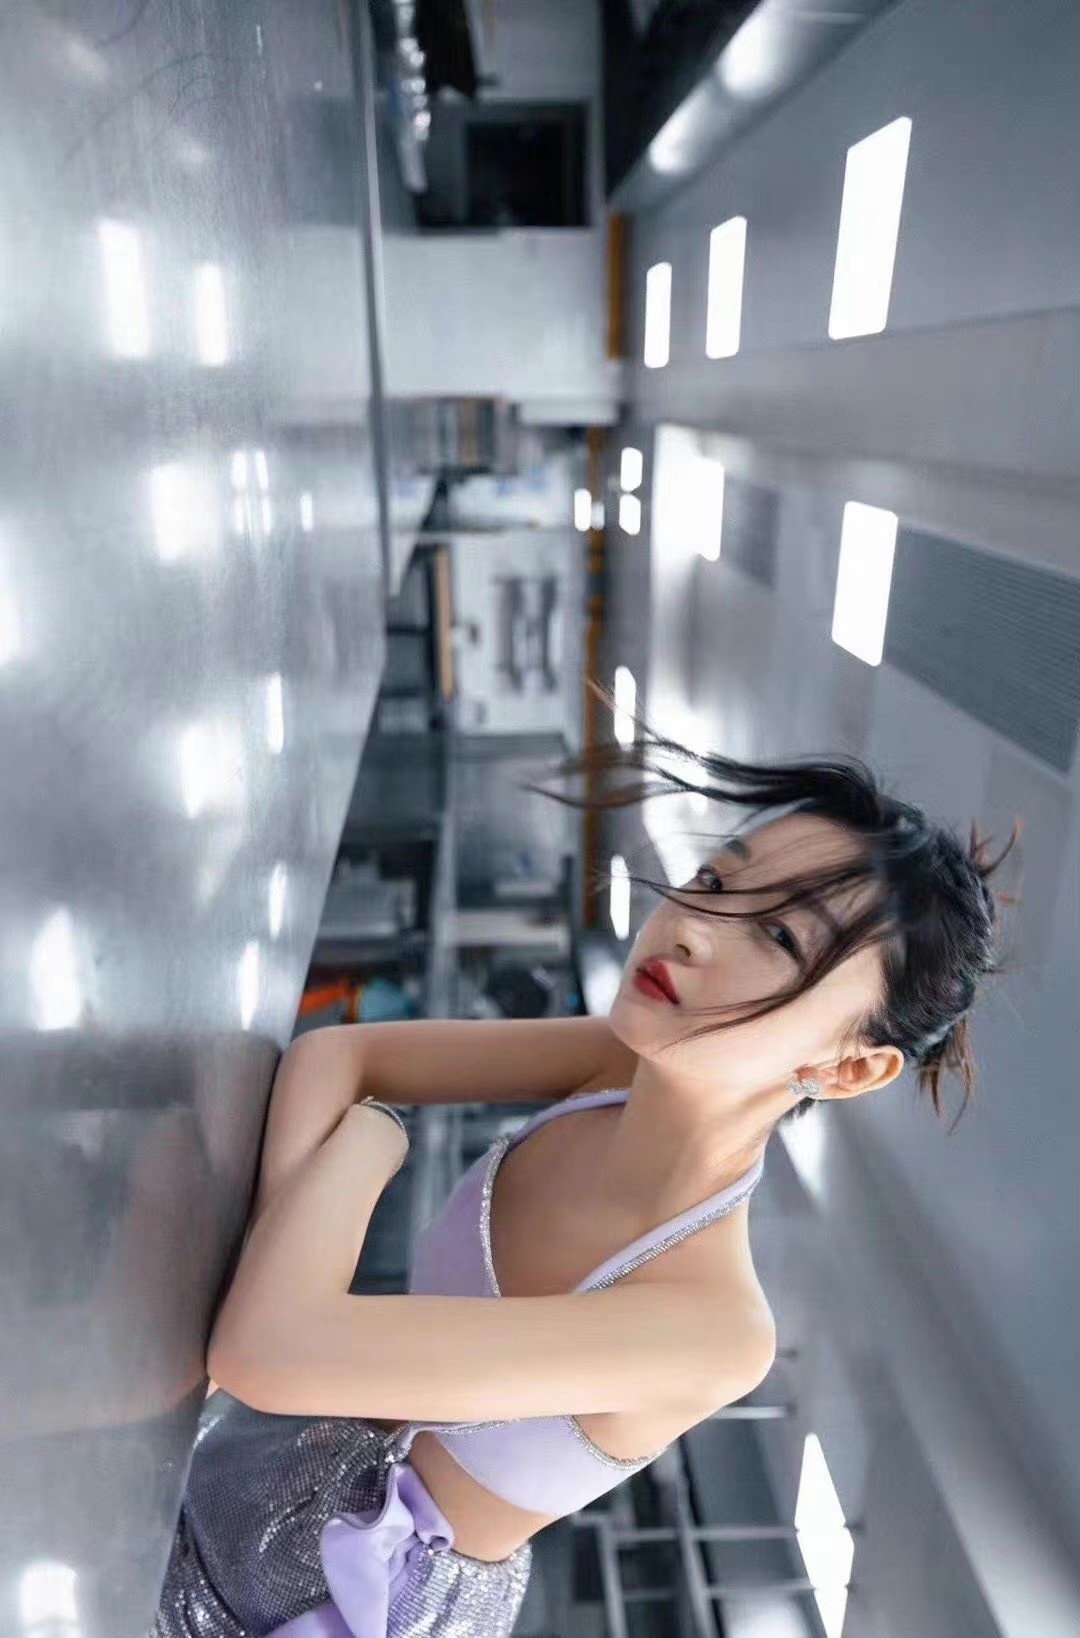 China's Zhou Dongyu on Redefining Sexy for Victoria's Secret – WWD